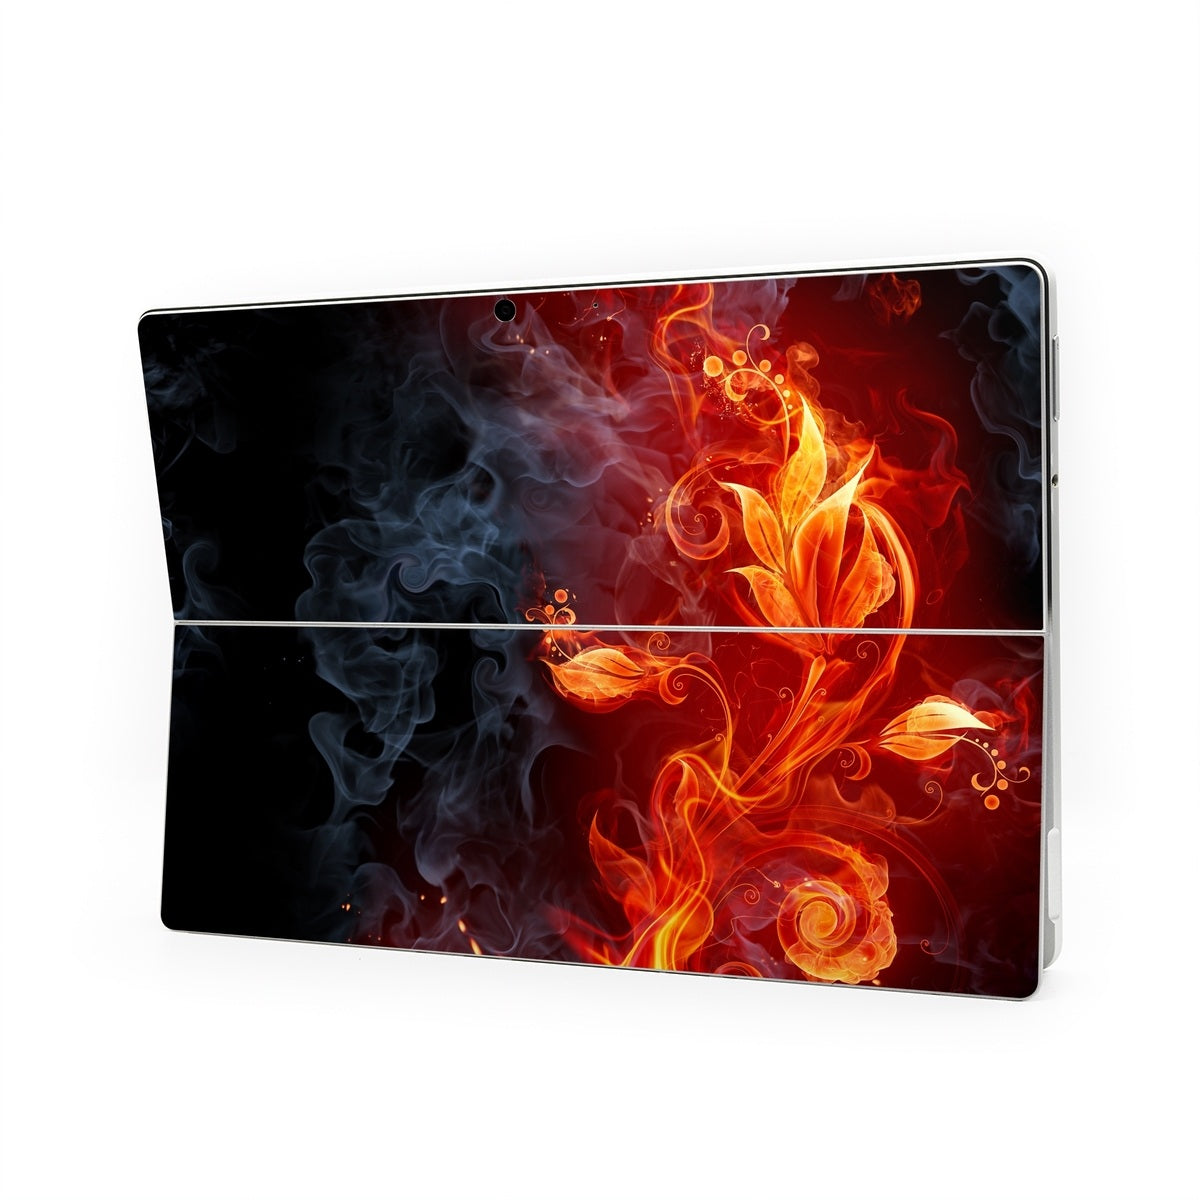 Flower Of Fire - Microsoft Surface Pro Skin